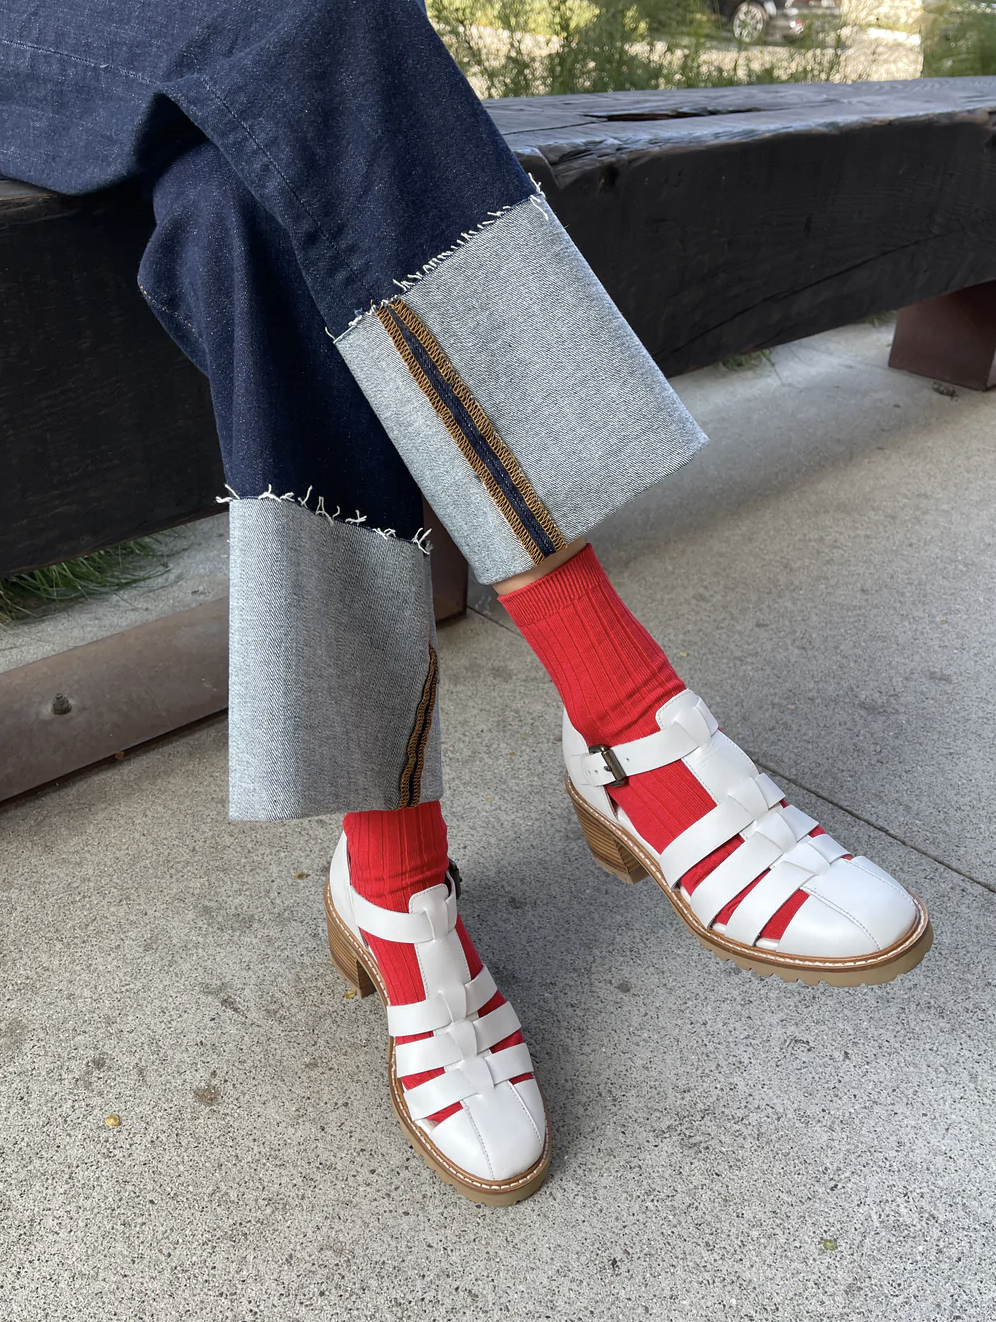 Her Socks Red